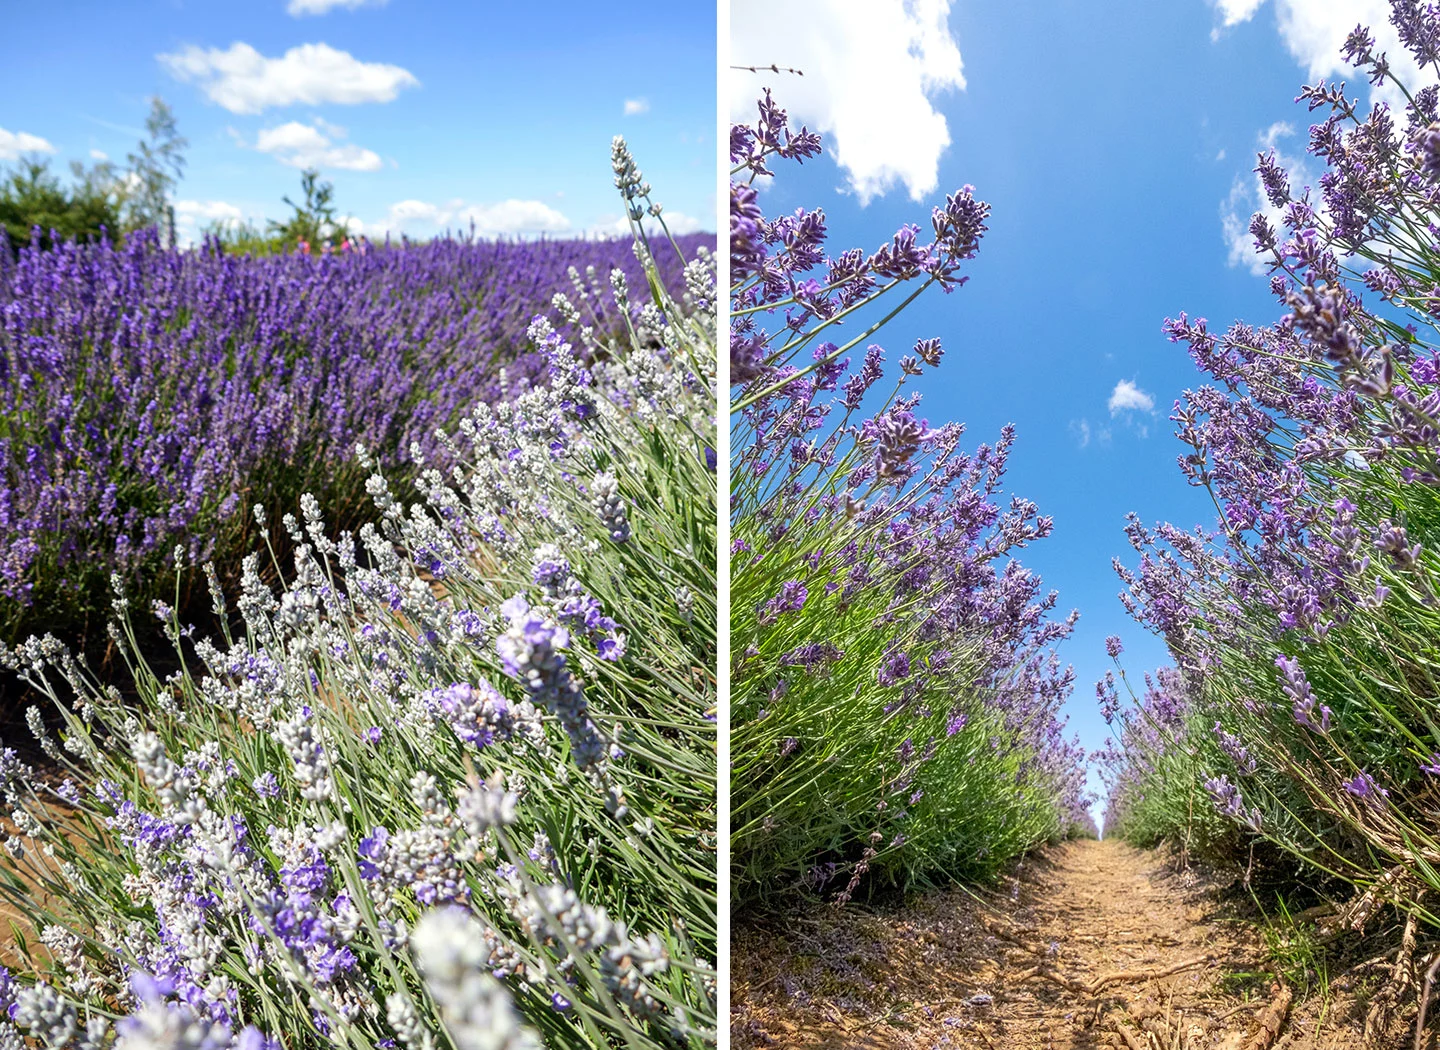 Purple and white varieties of lavender